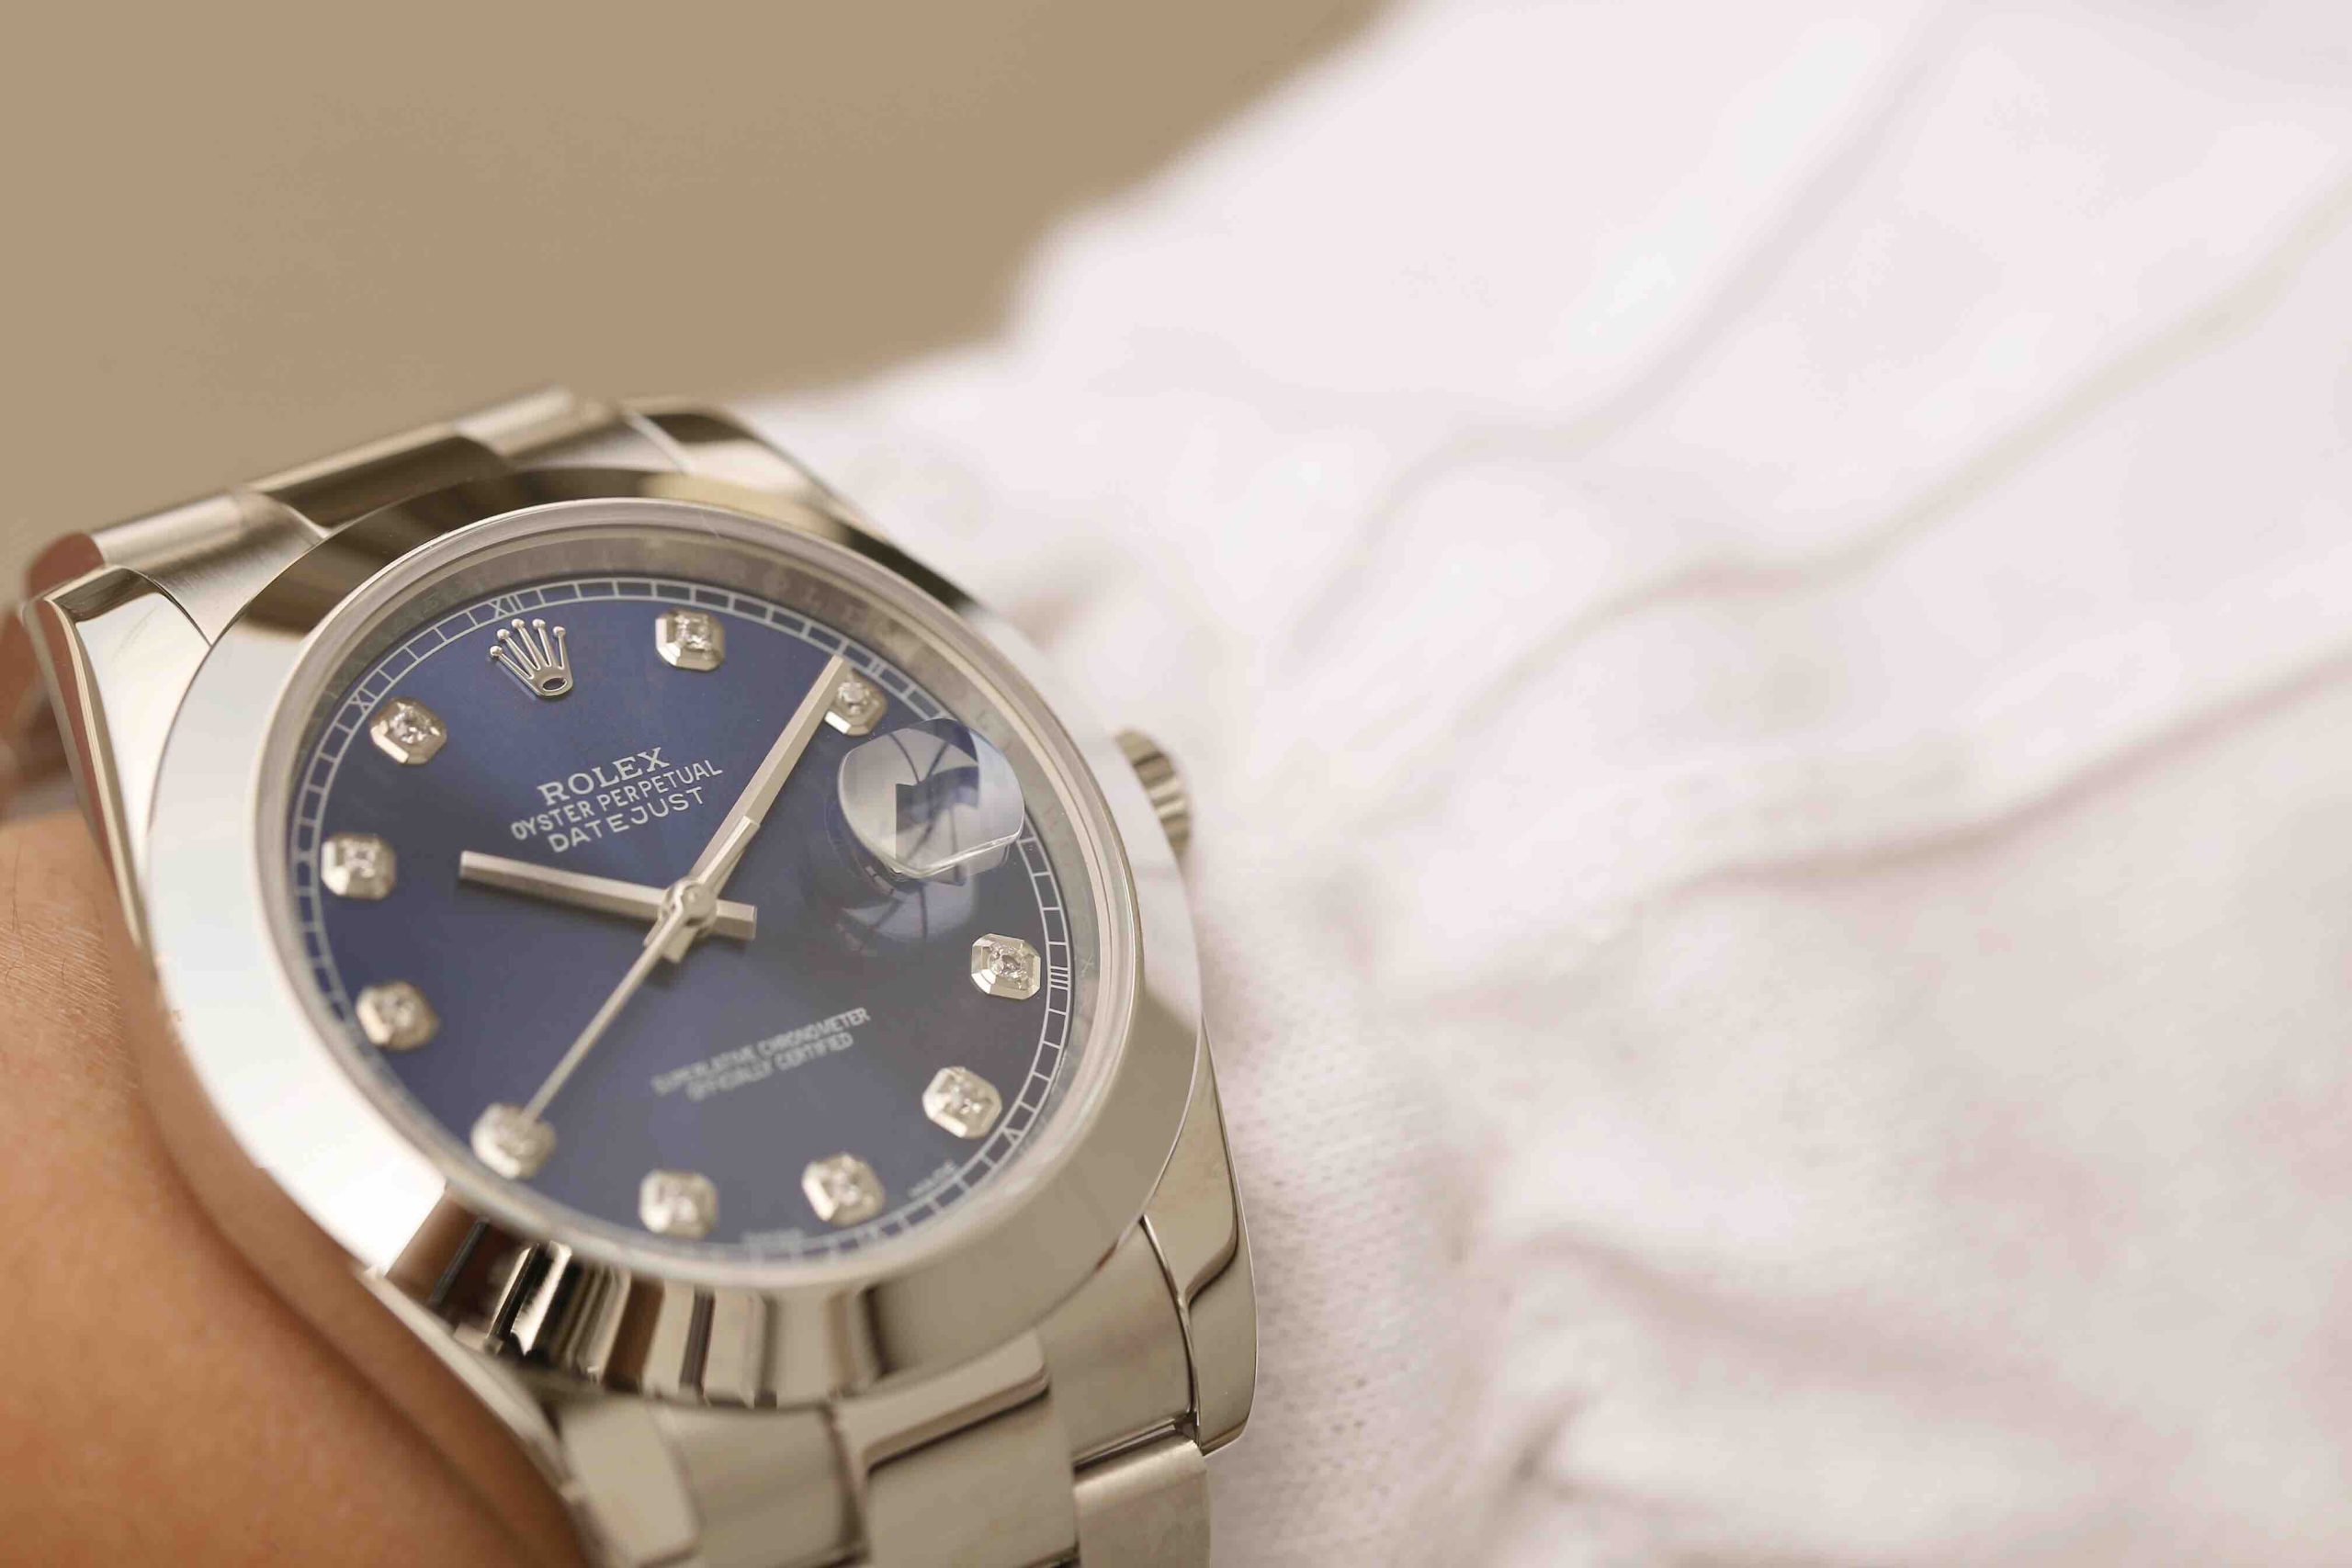 2023060703044730 scaled - 高仿手錶藍鉆勞力士日誌 ew廠日誌3235機芯126300￥2780